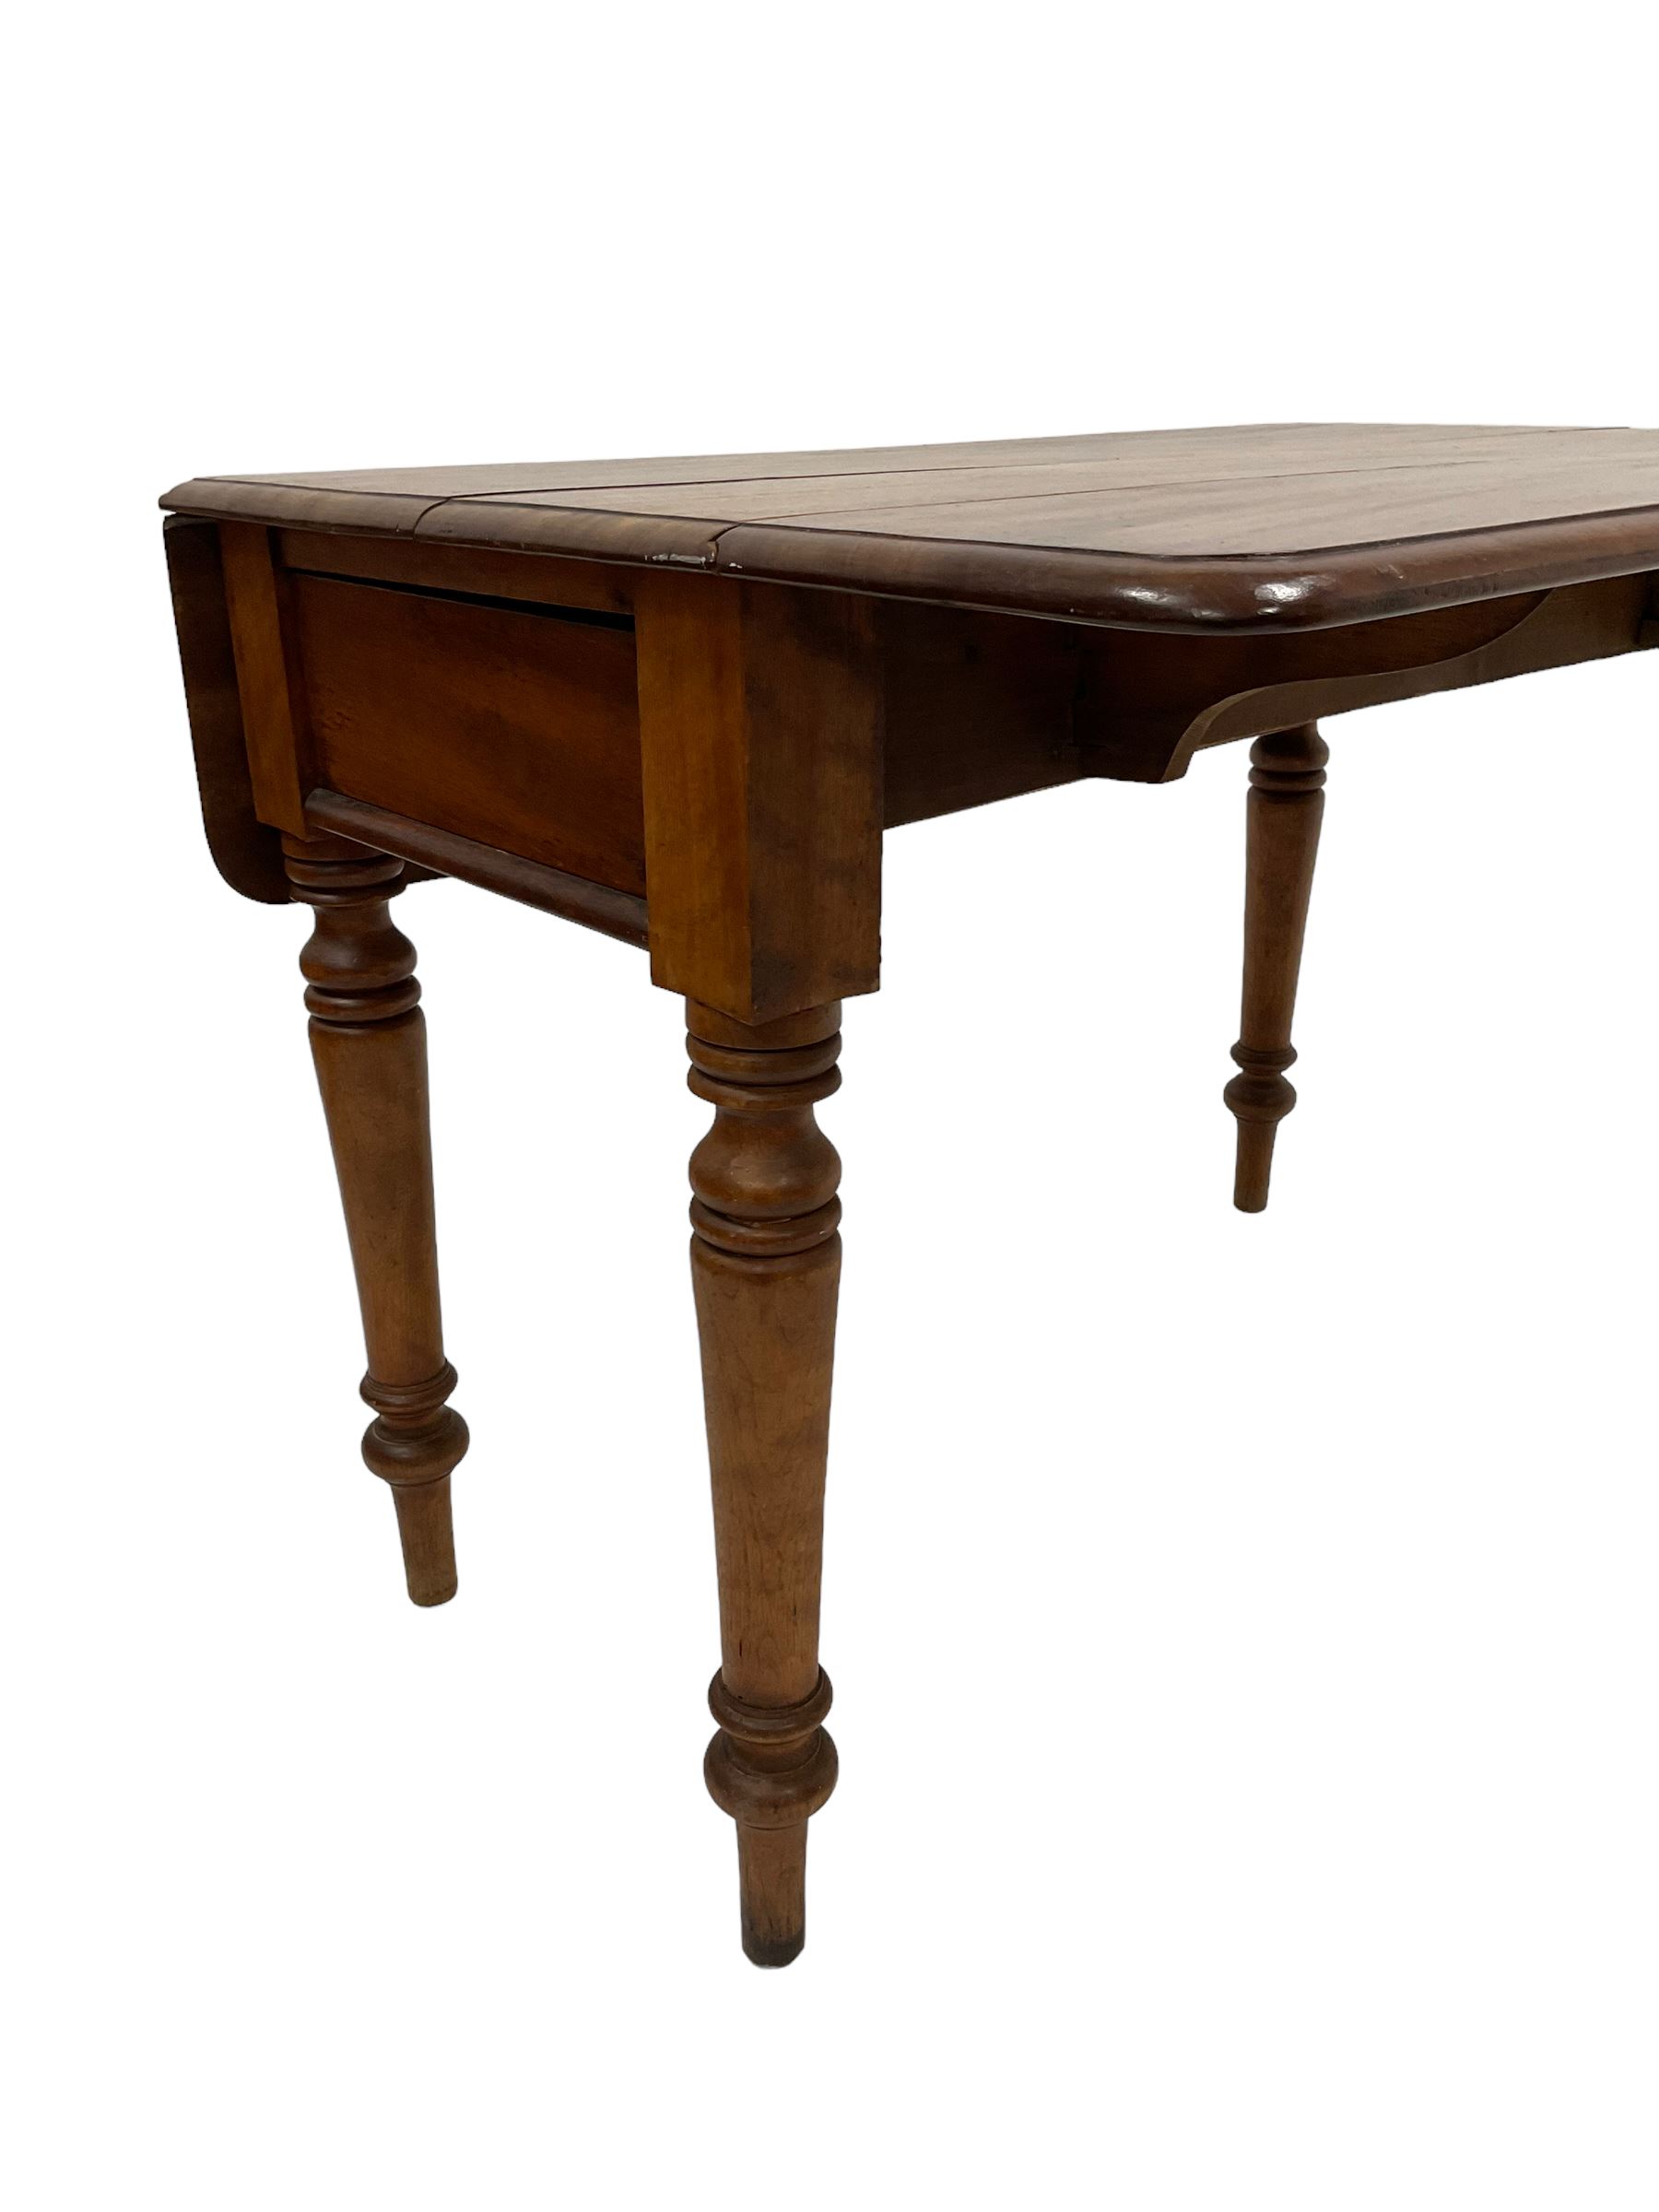 Victorian mahogany Pembroke table - Image 5 of 5